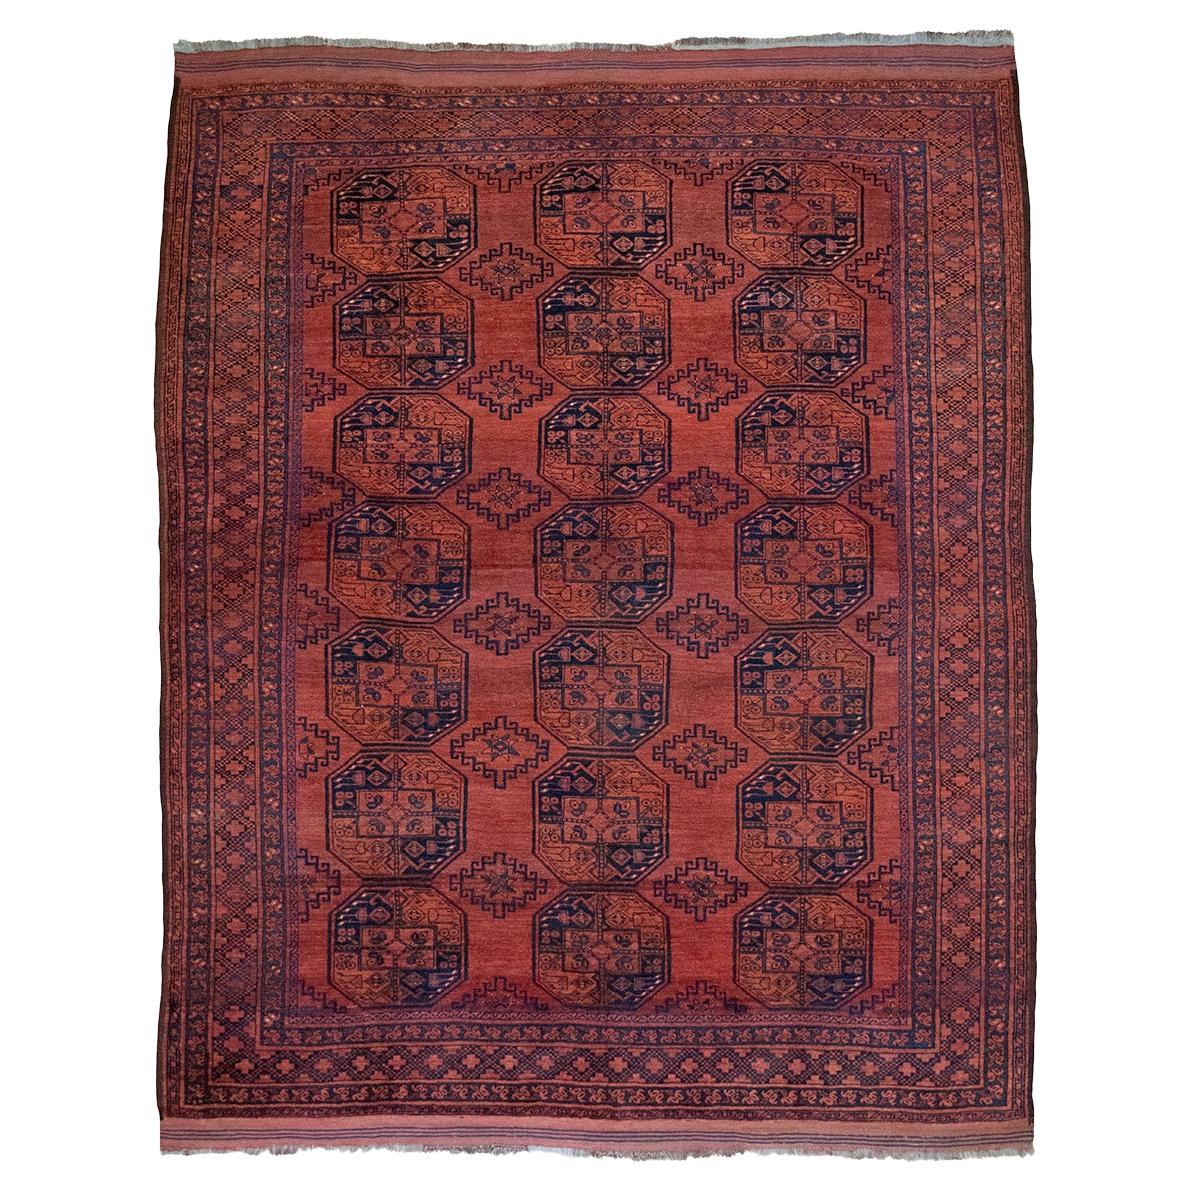 Turkmen Main Carpet 'DK-114-1'